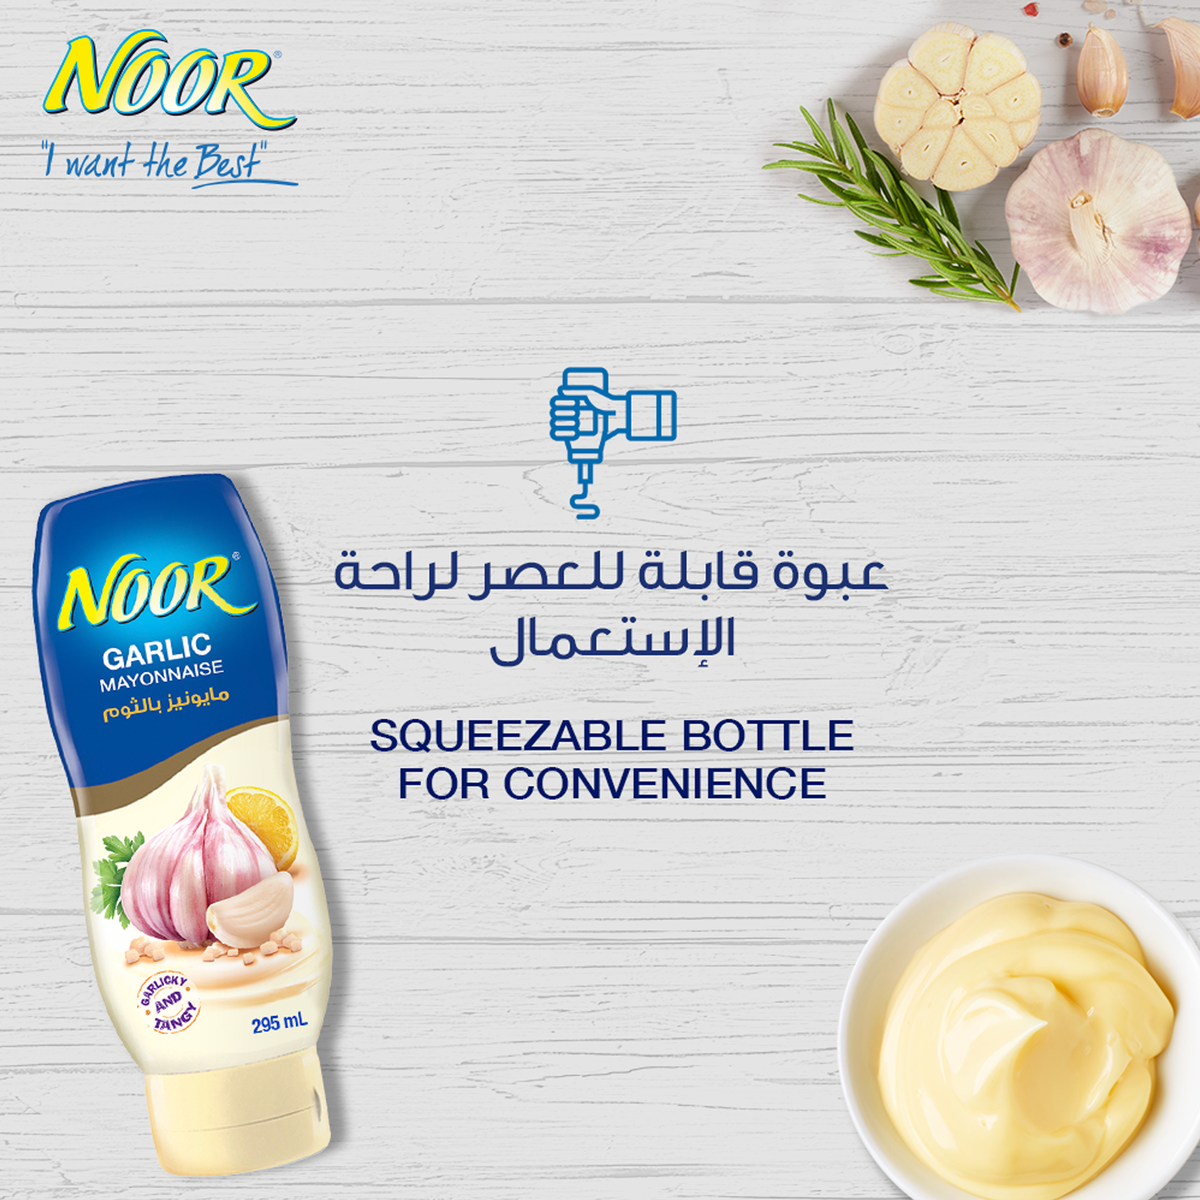 Noor Mayonnaise Garlic Squeeze 295 ml